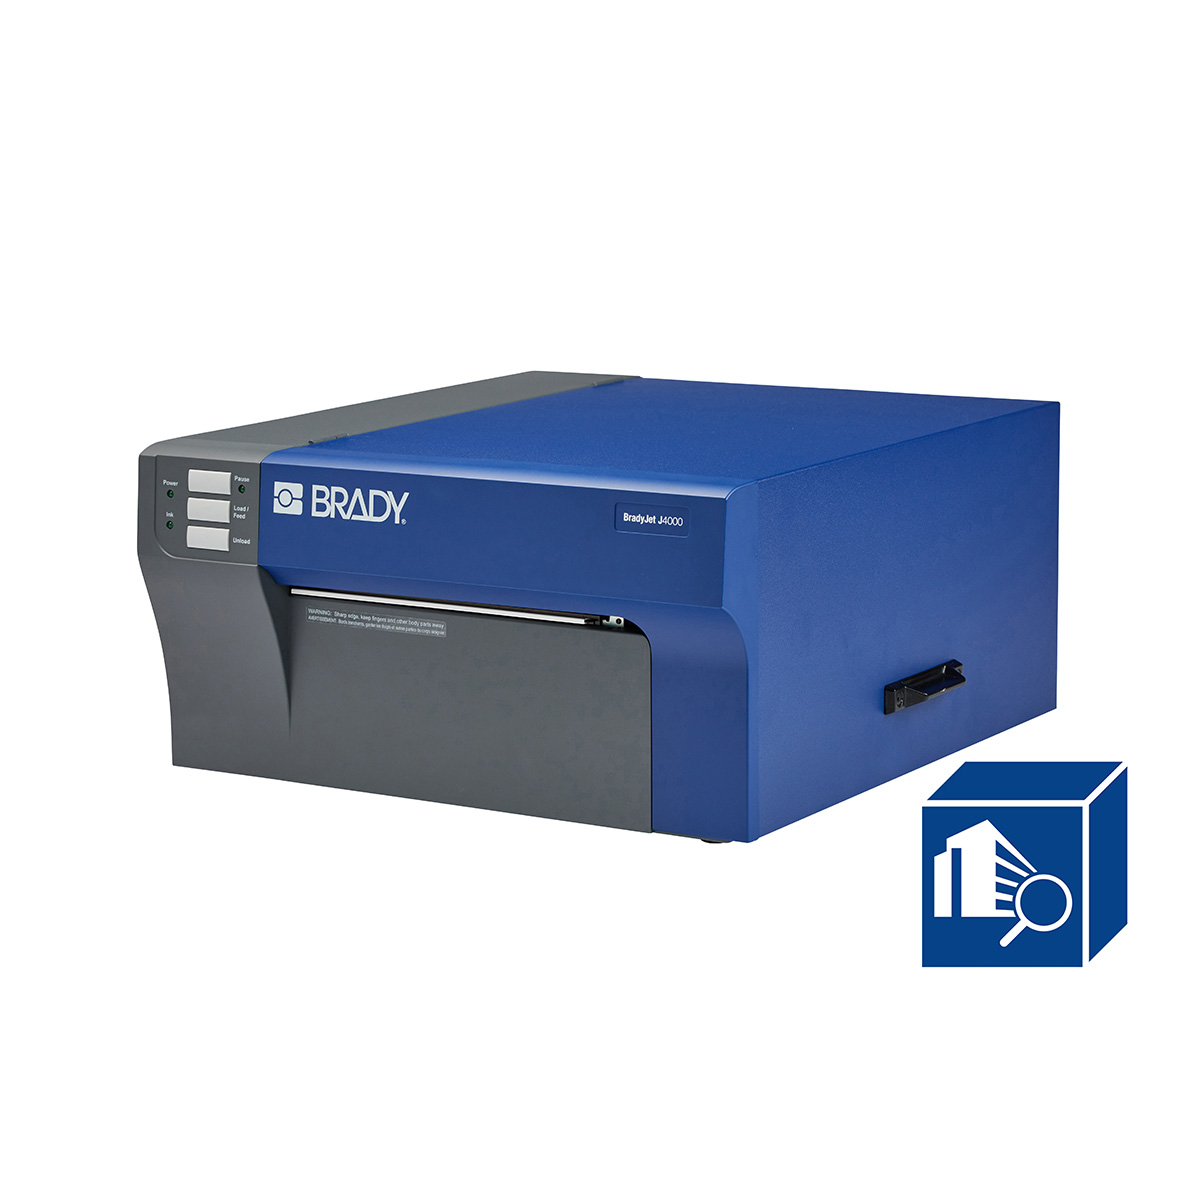 BradyJet J4000 Printer SFID Software Ste